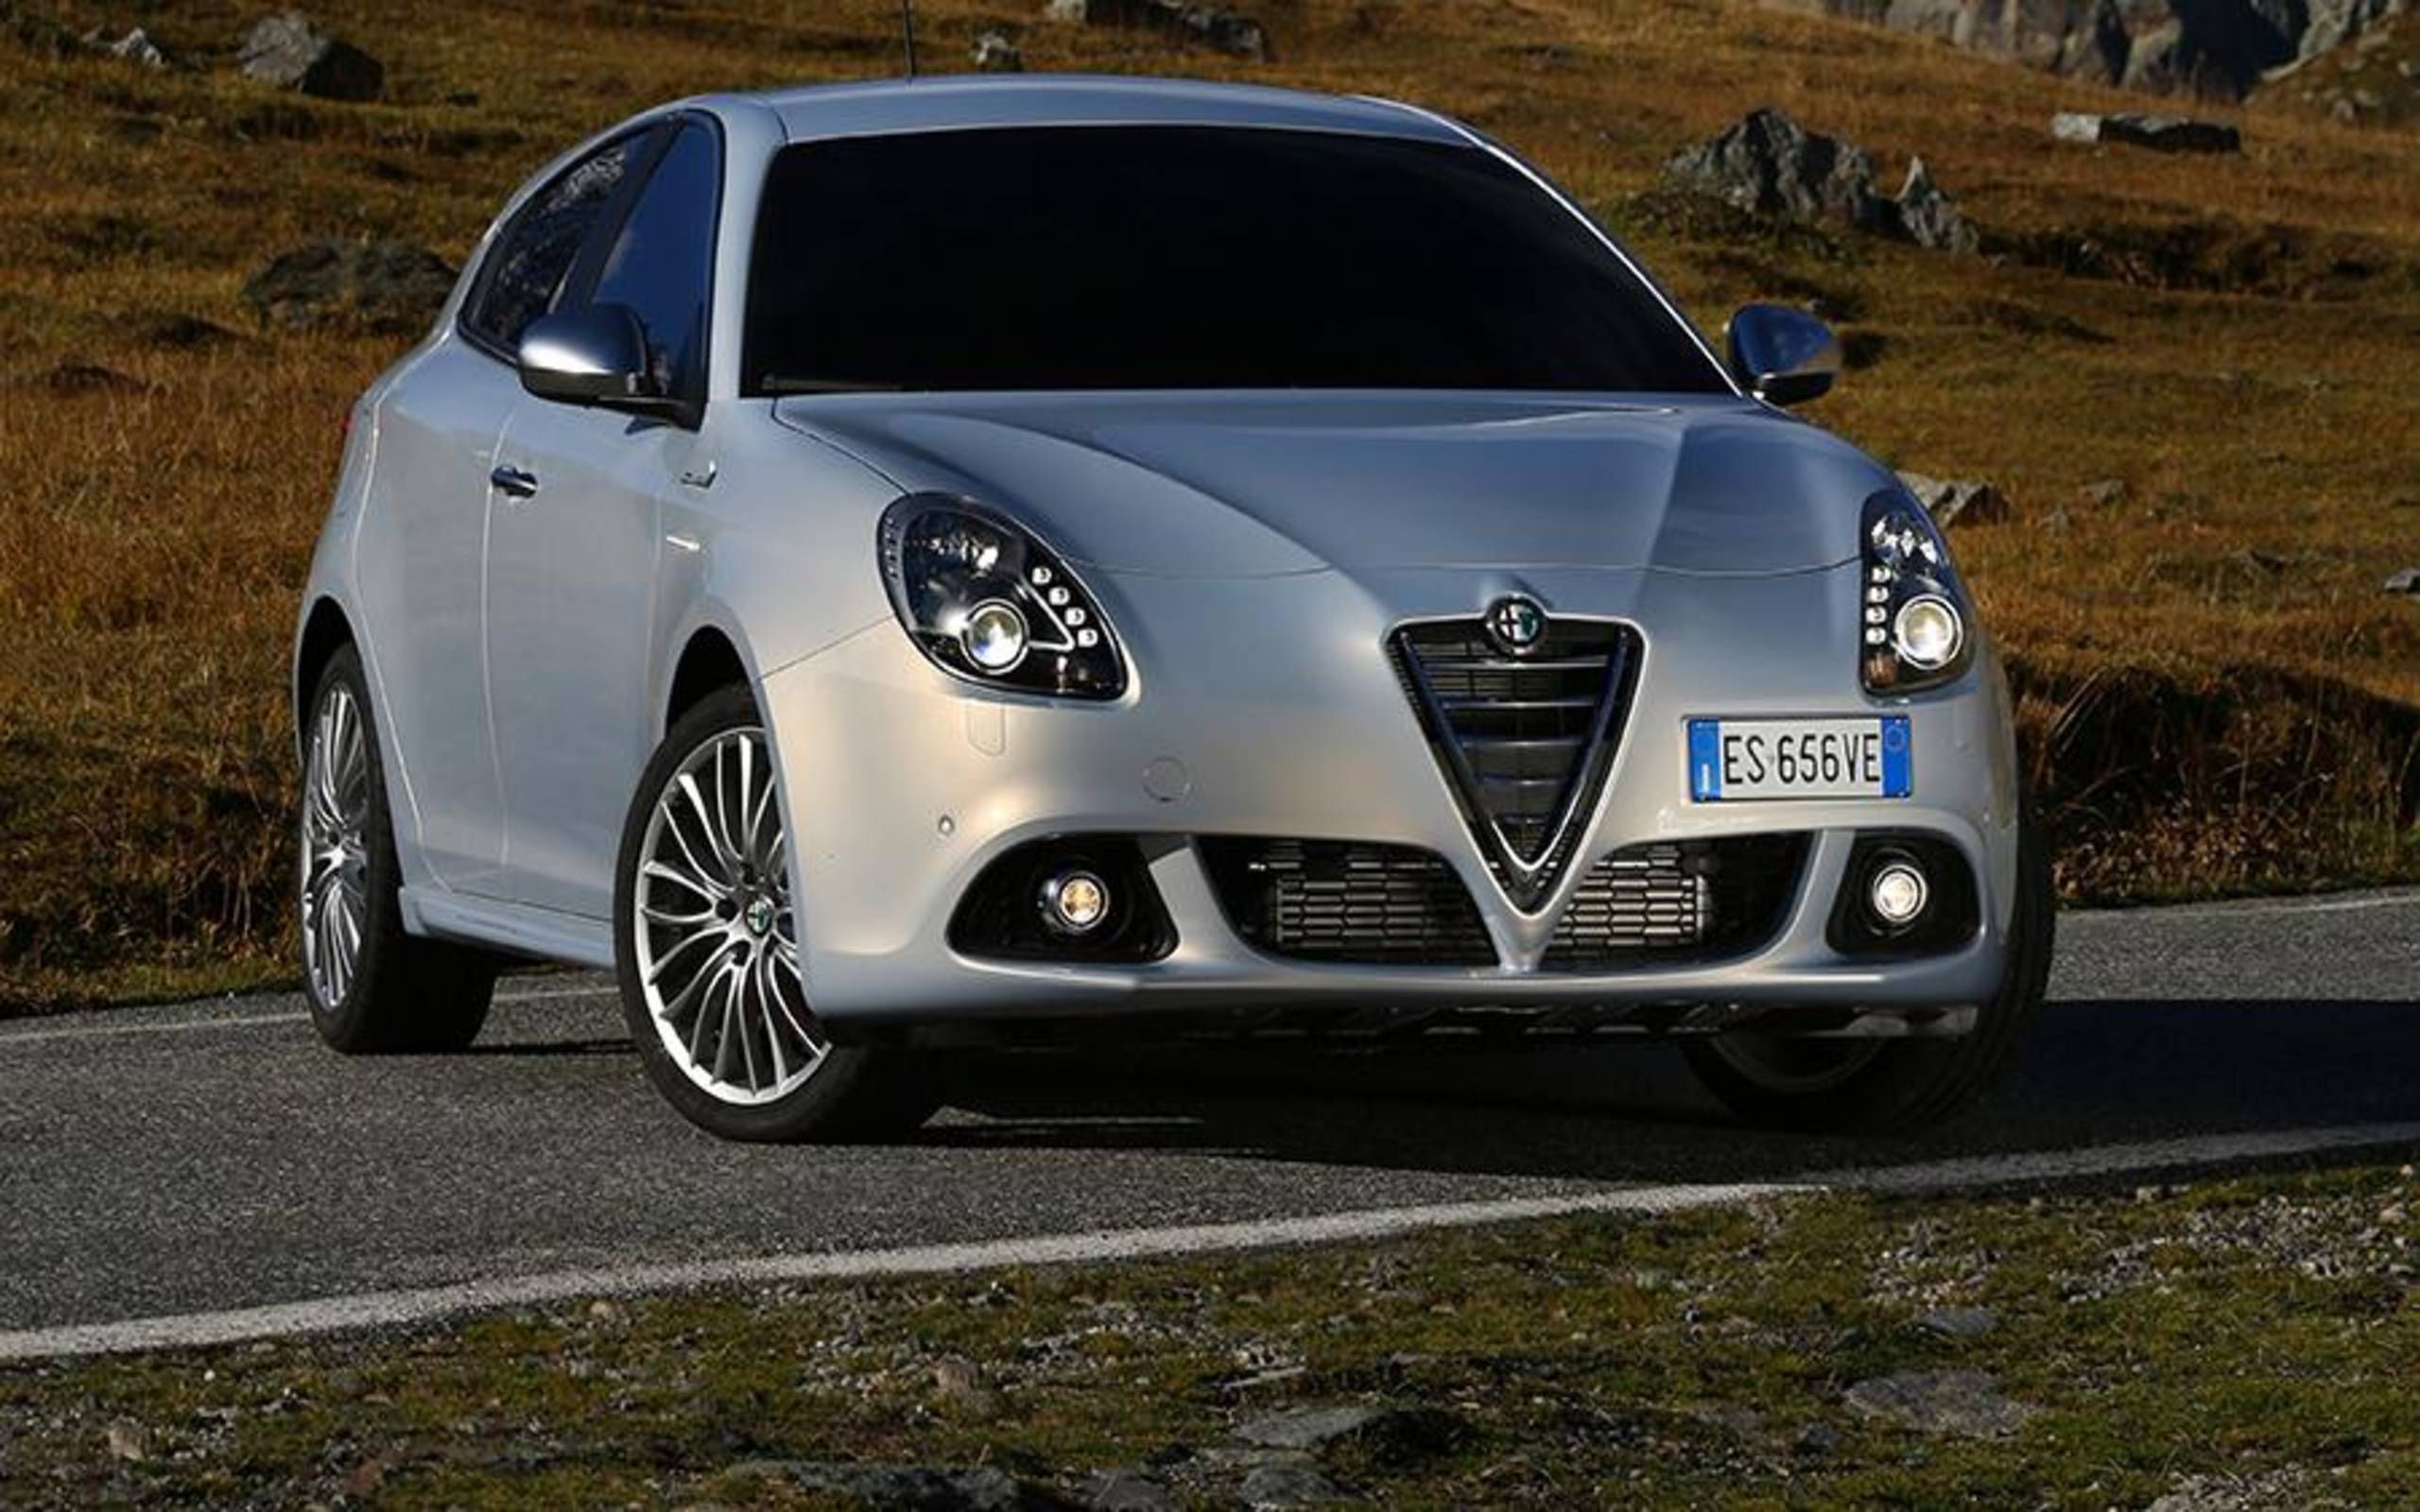 Vote: Would you buy an Alfa Romeo Giulietta?